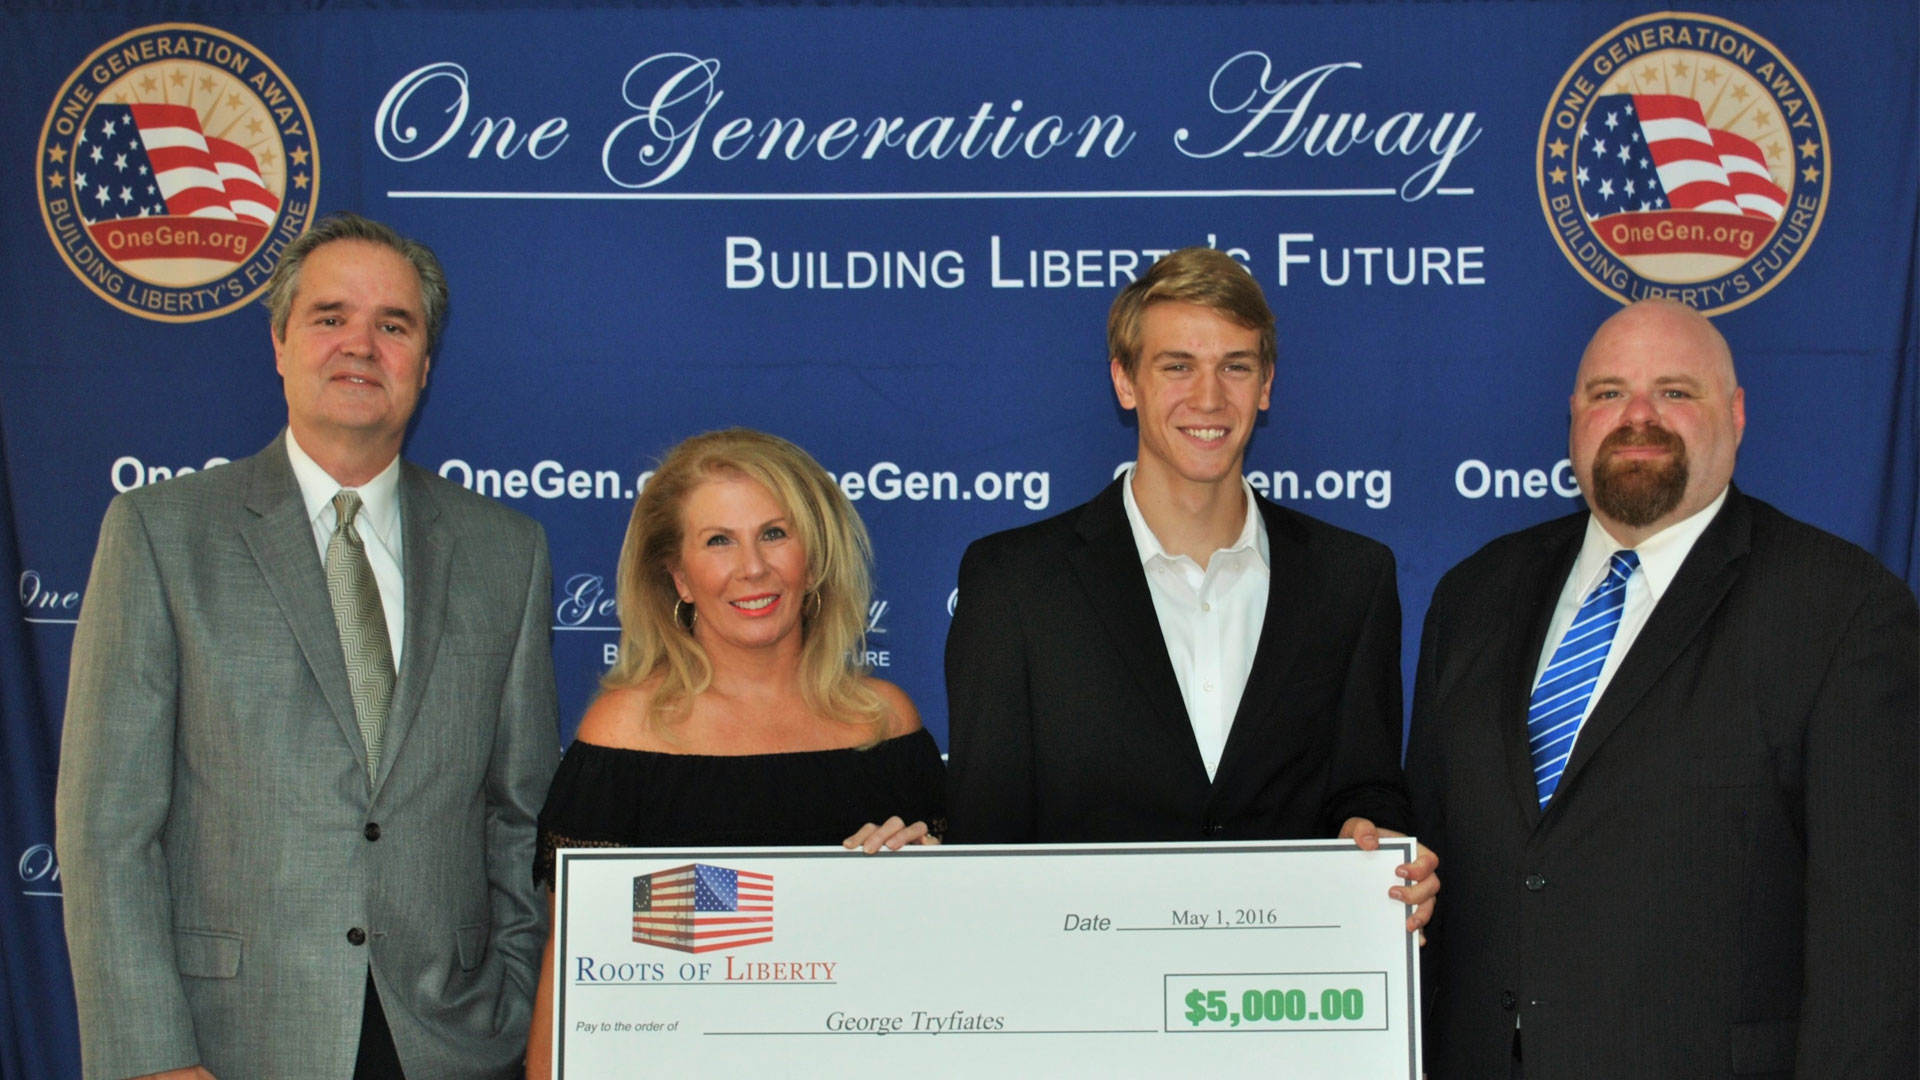 Religious liberty essay scholarship contest winners